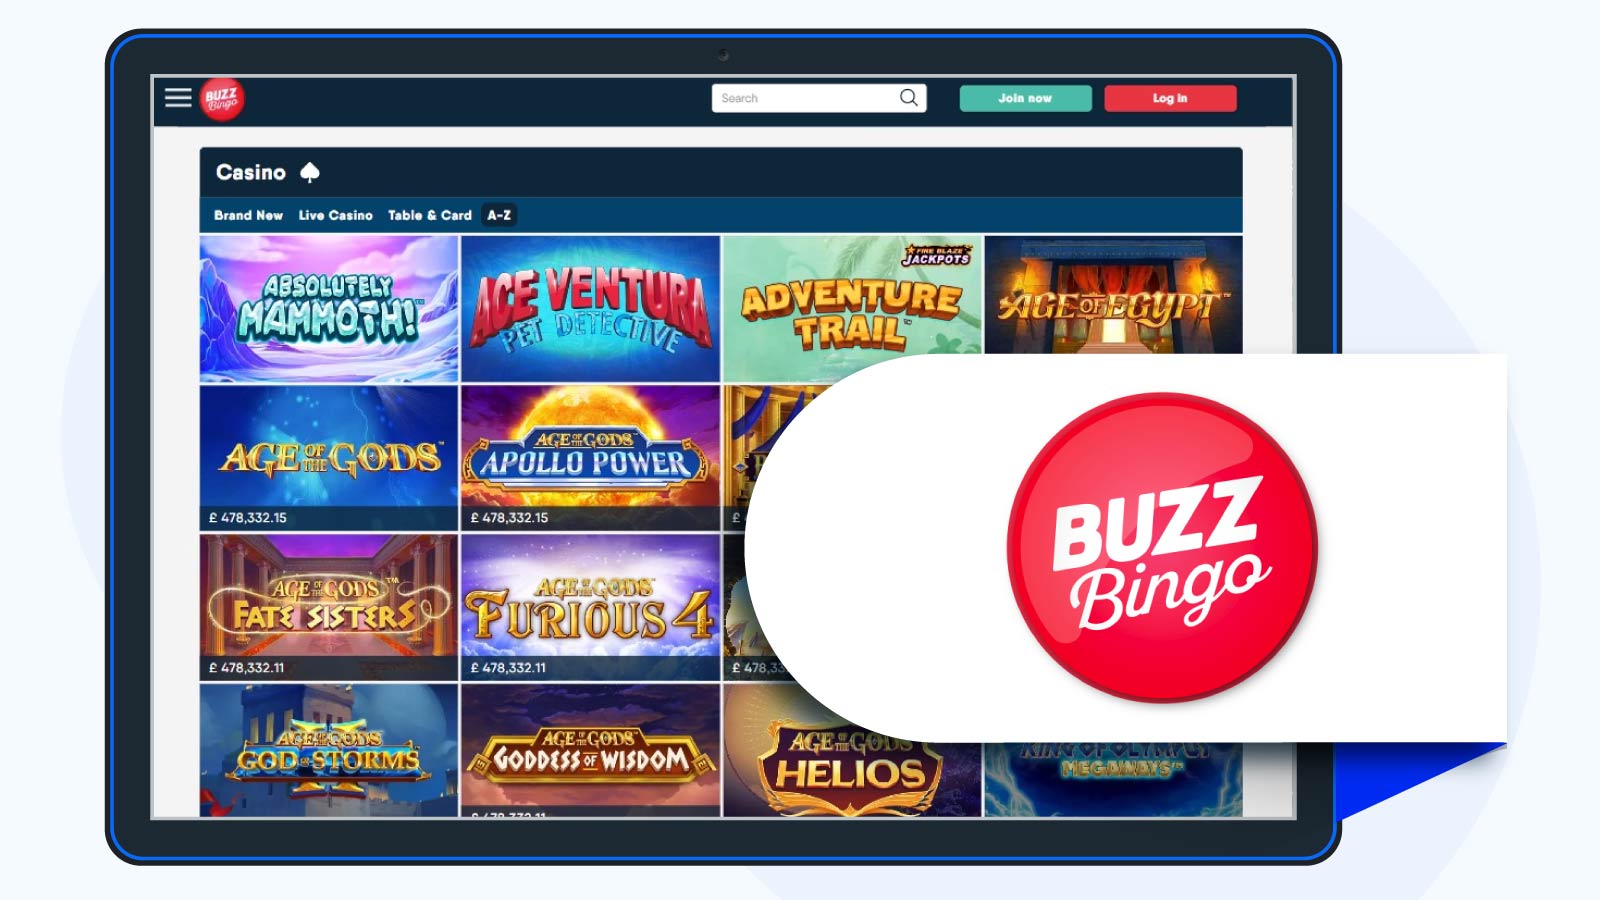 Buzz-Bingo-Casino-Minimum-Deposit-Casino-UK-Review